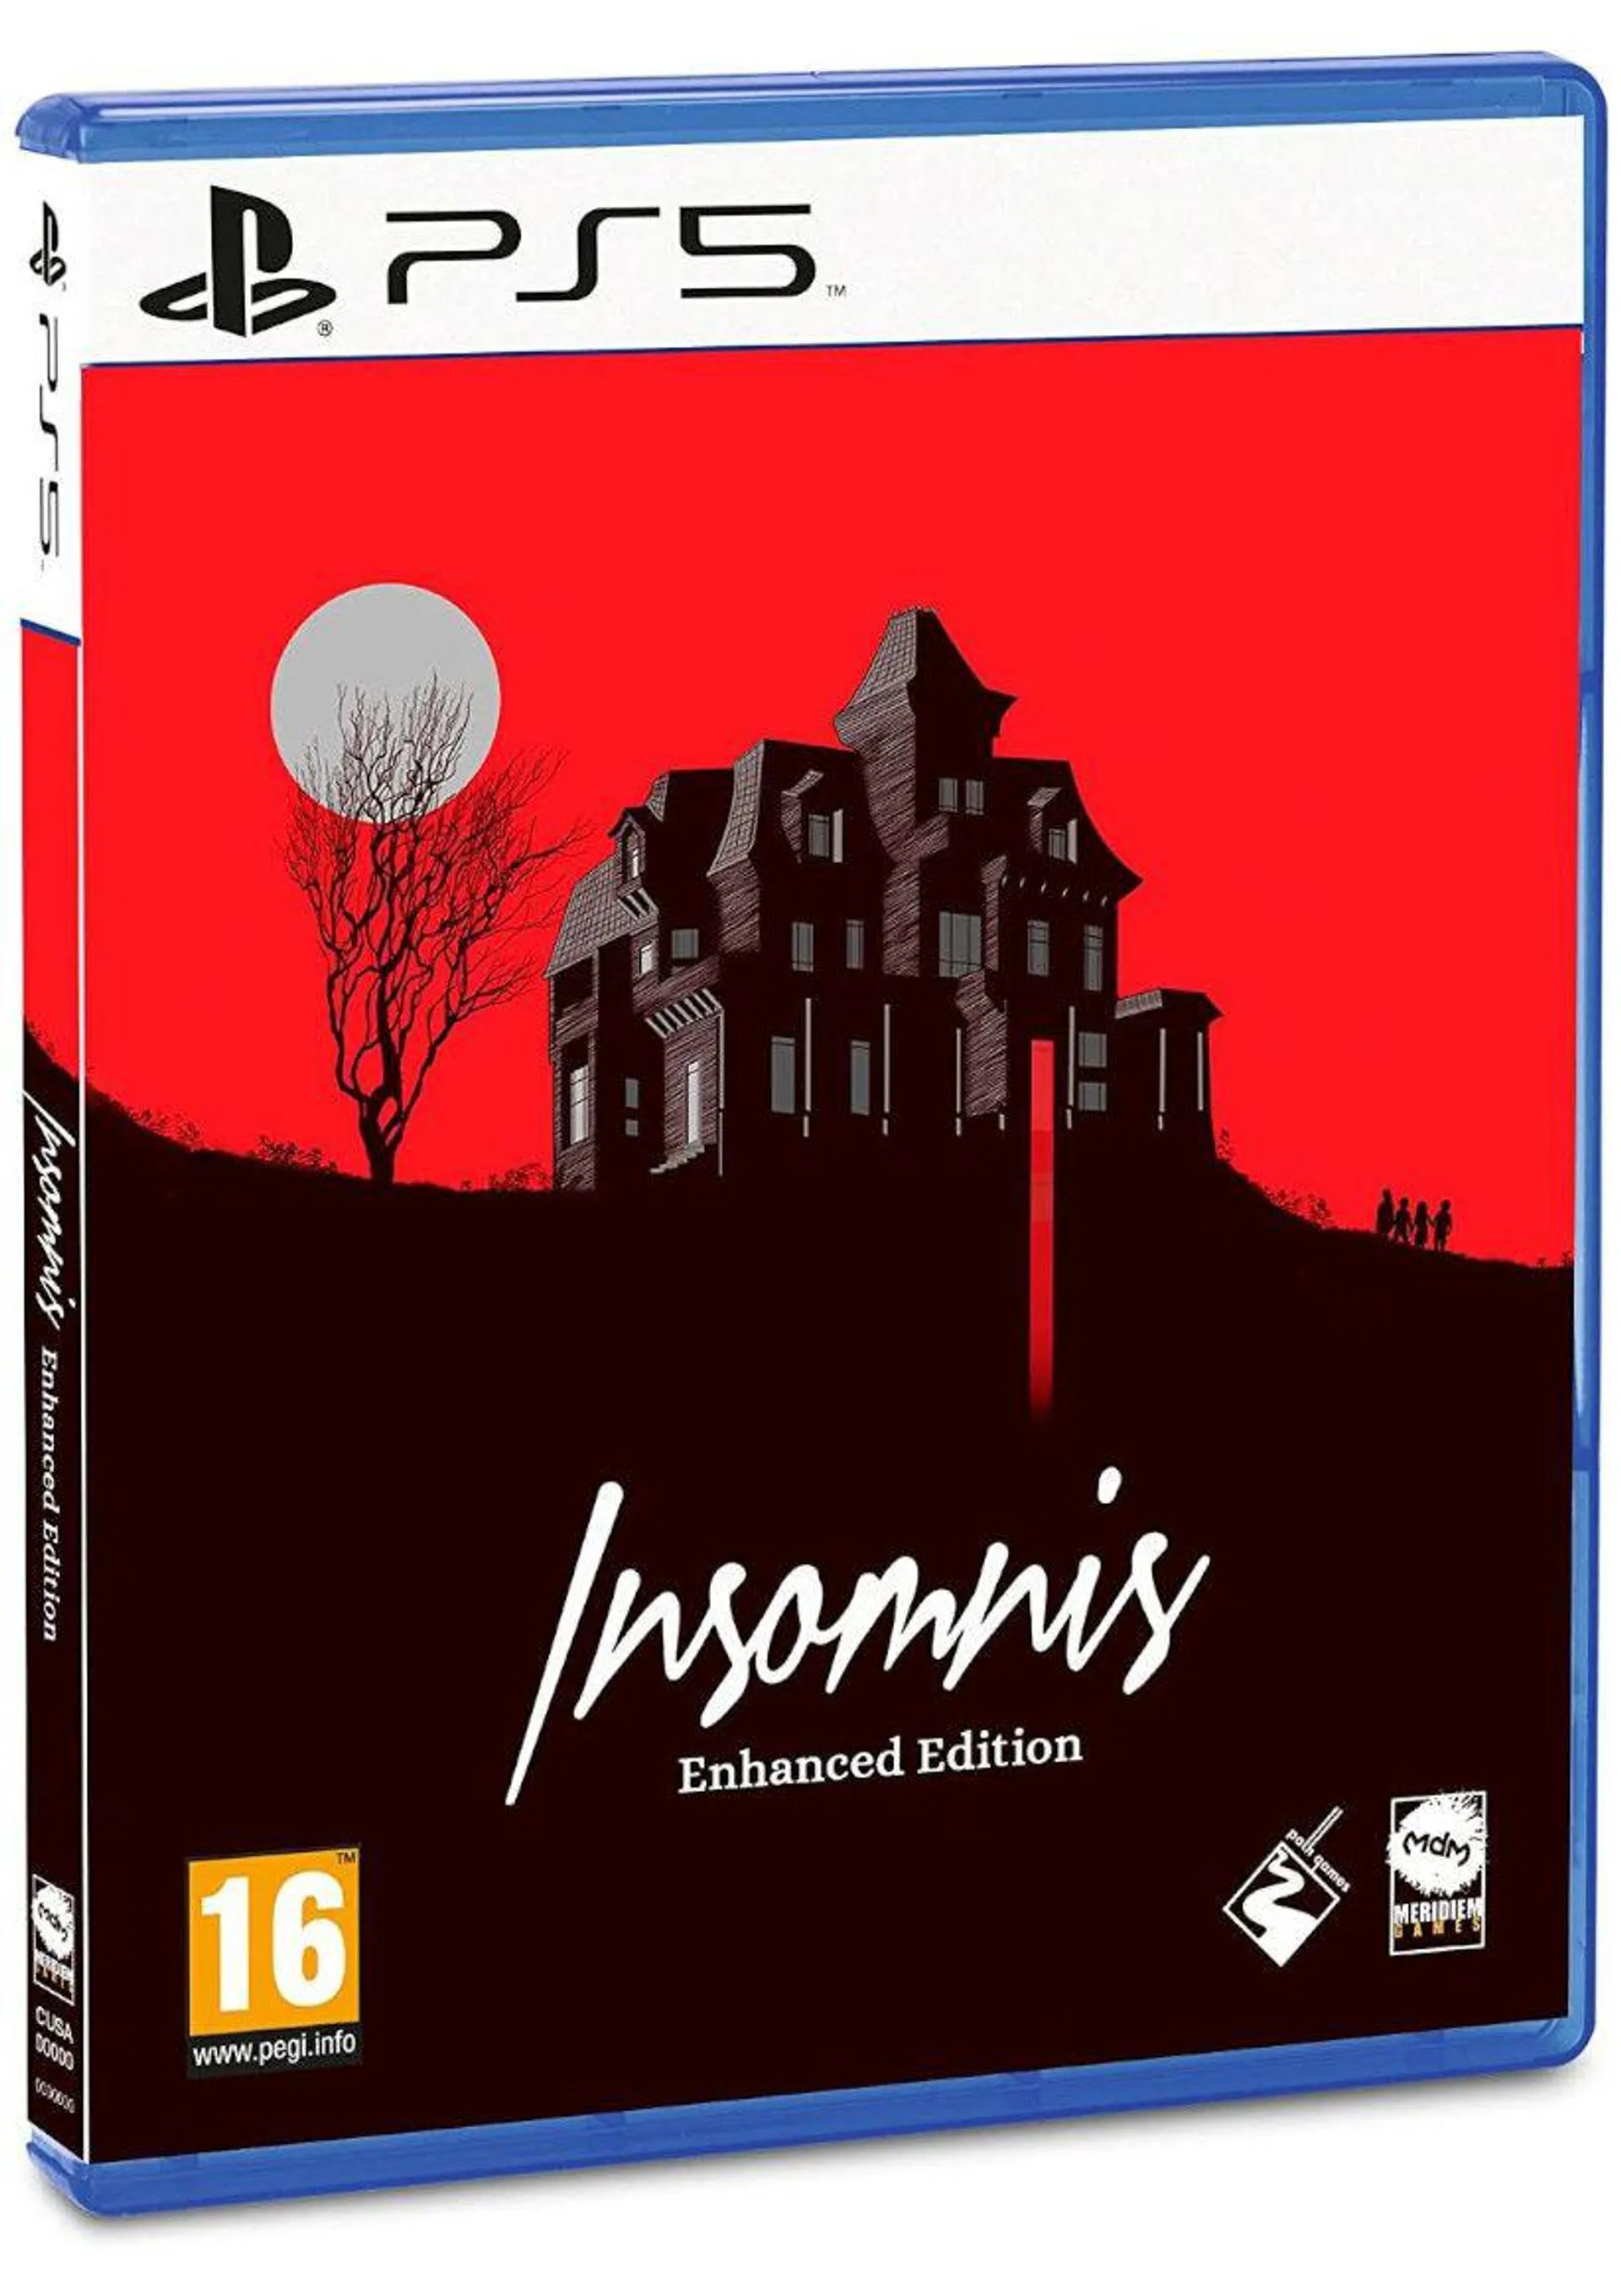 Insomnis Enhanced Edition on PlayStation 5